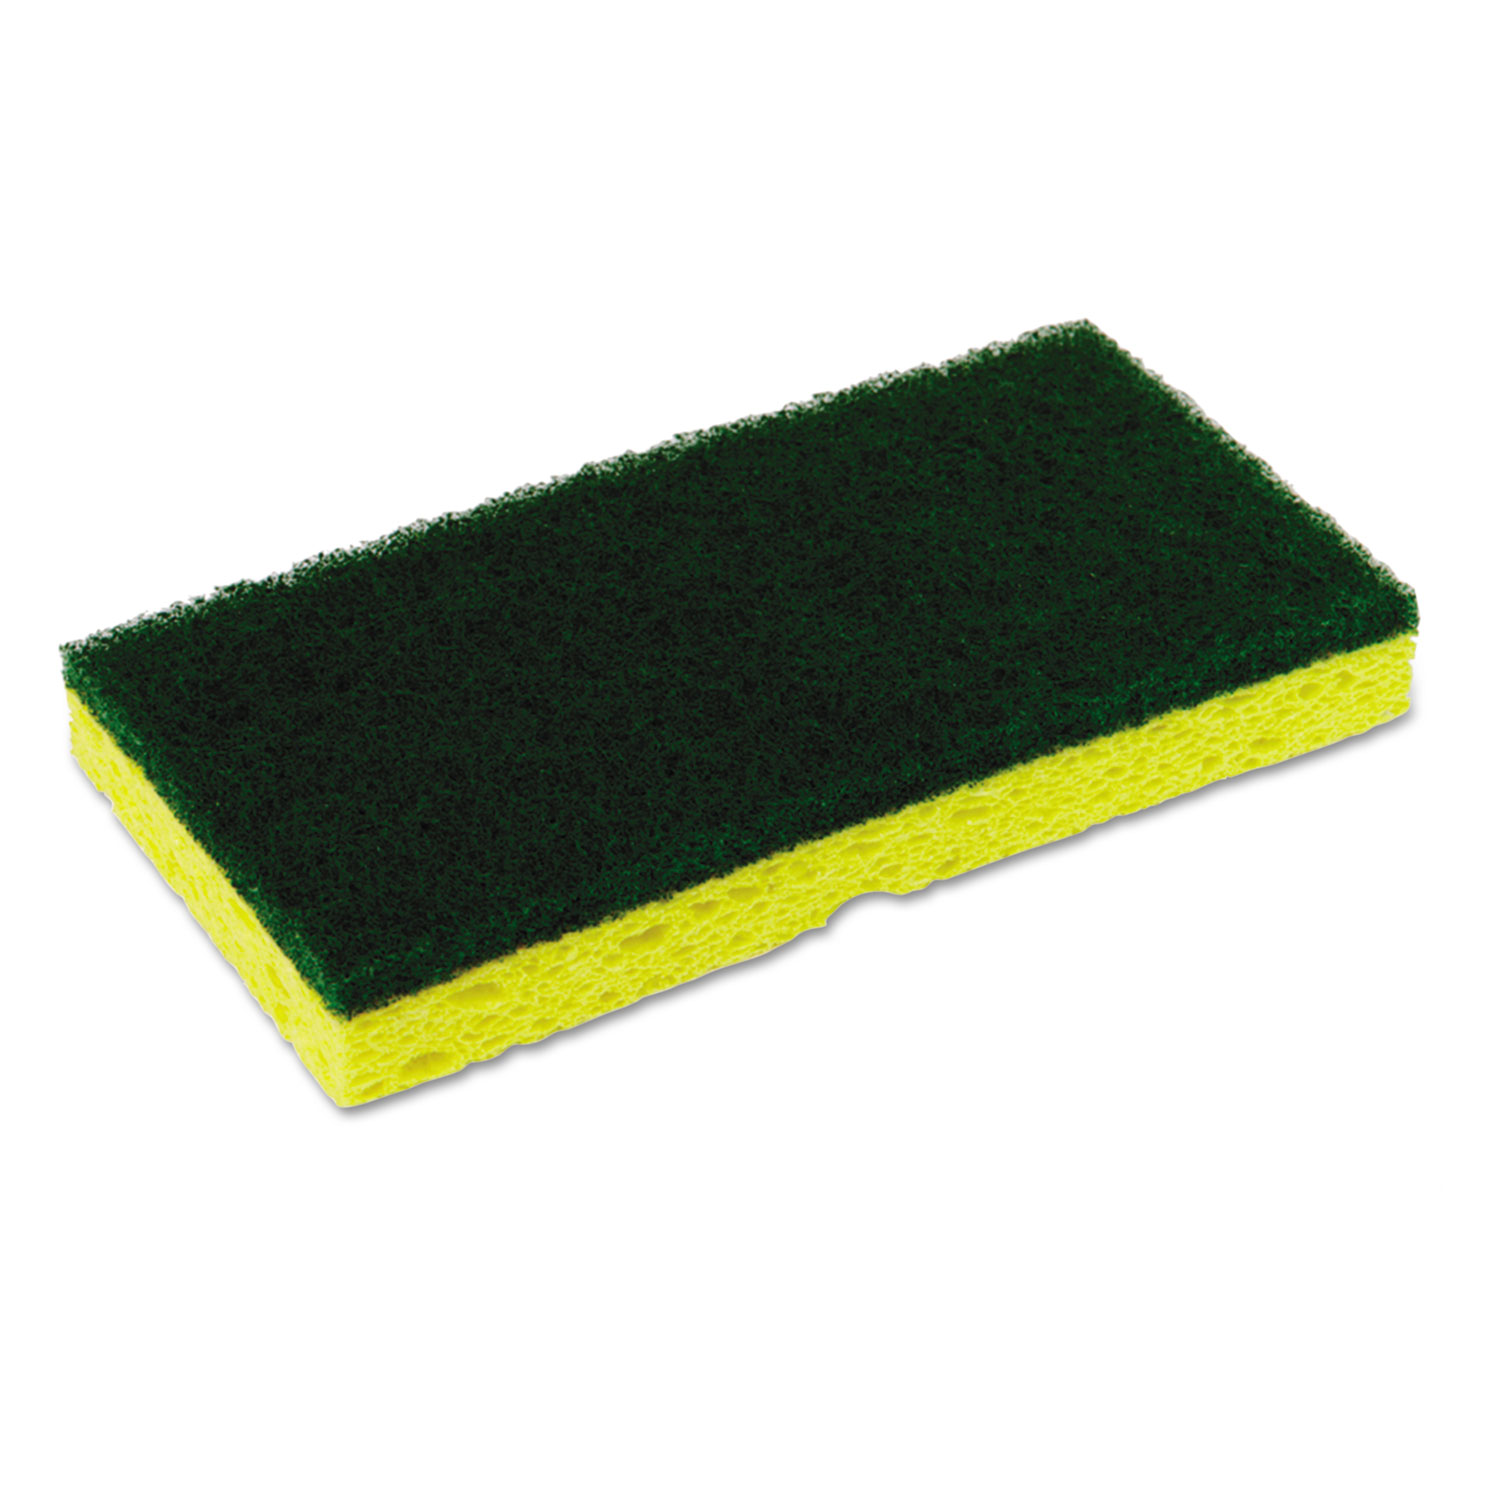  Continental SS652 Medium-Duty Scrubber Sponge, 3 1/8 x 6 1/4 in, Yellow/Green, 5/PK, 8 PK/CT (CMCSS652) 